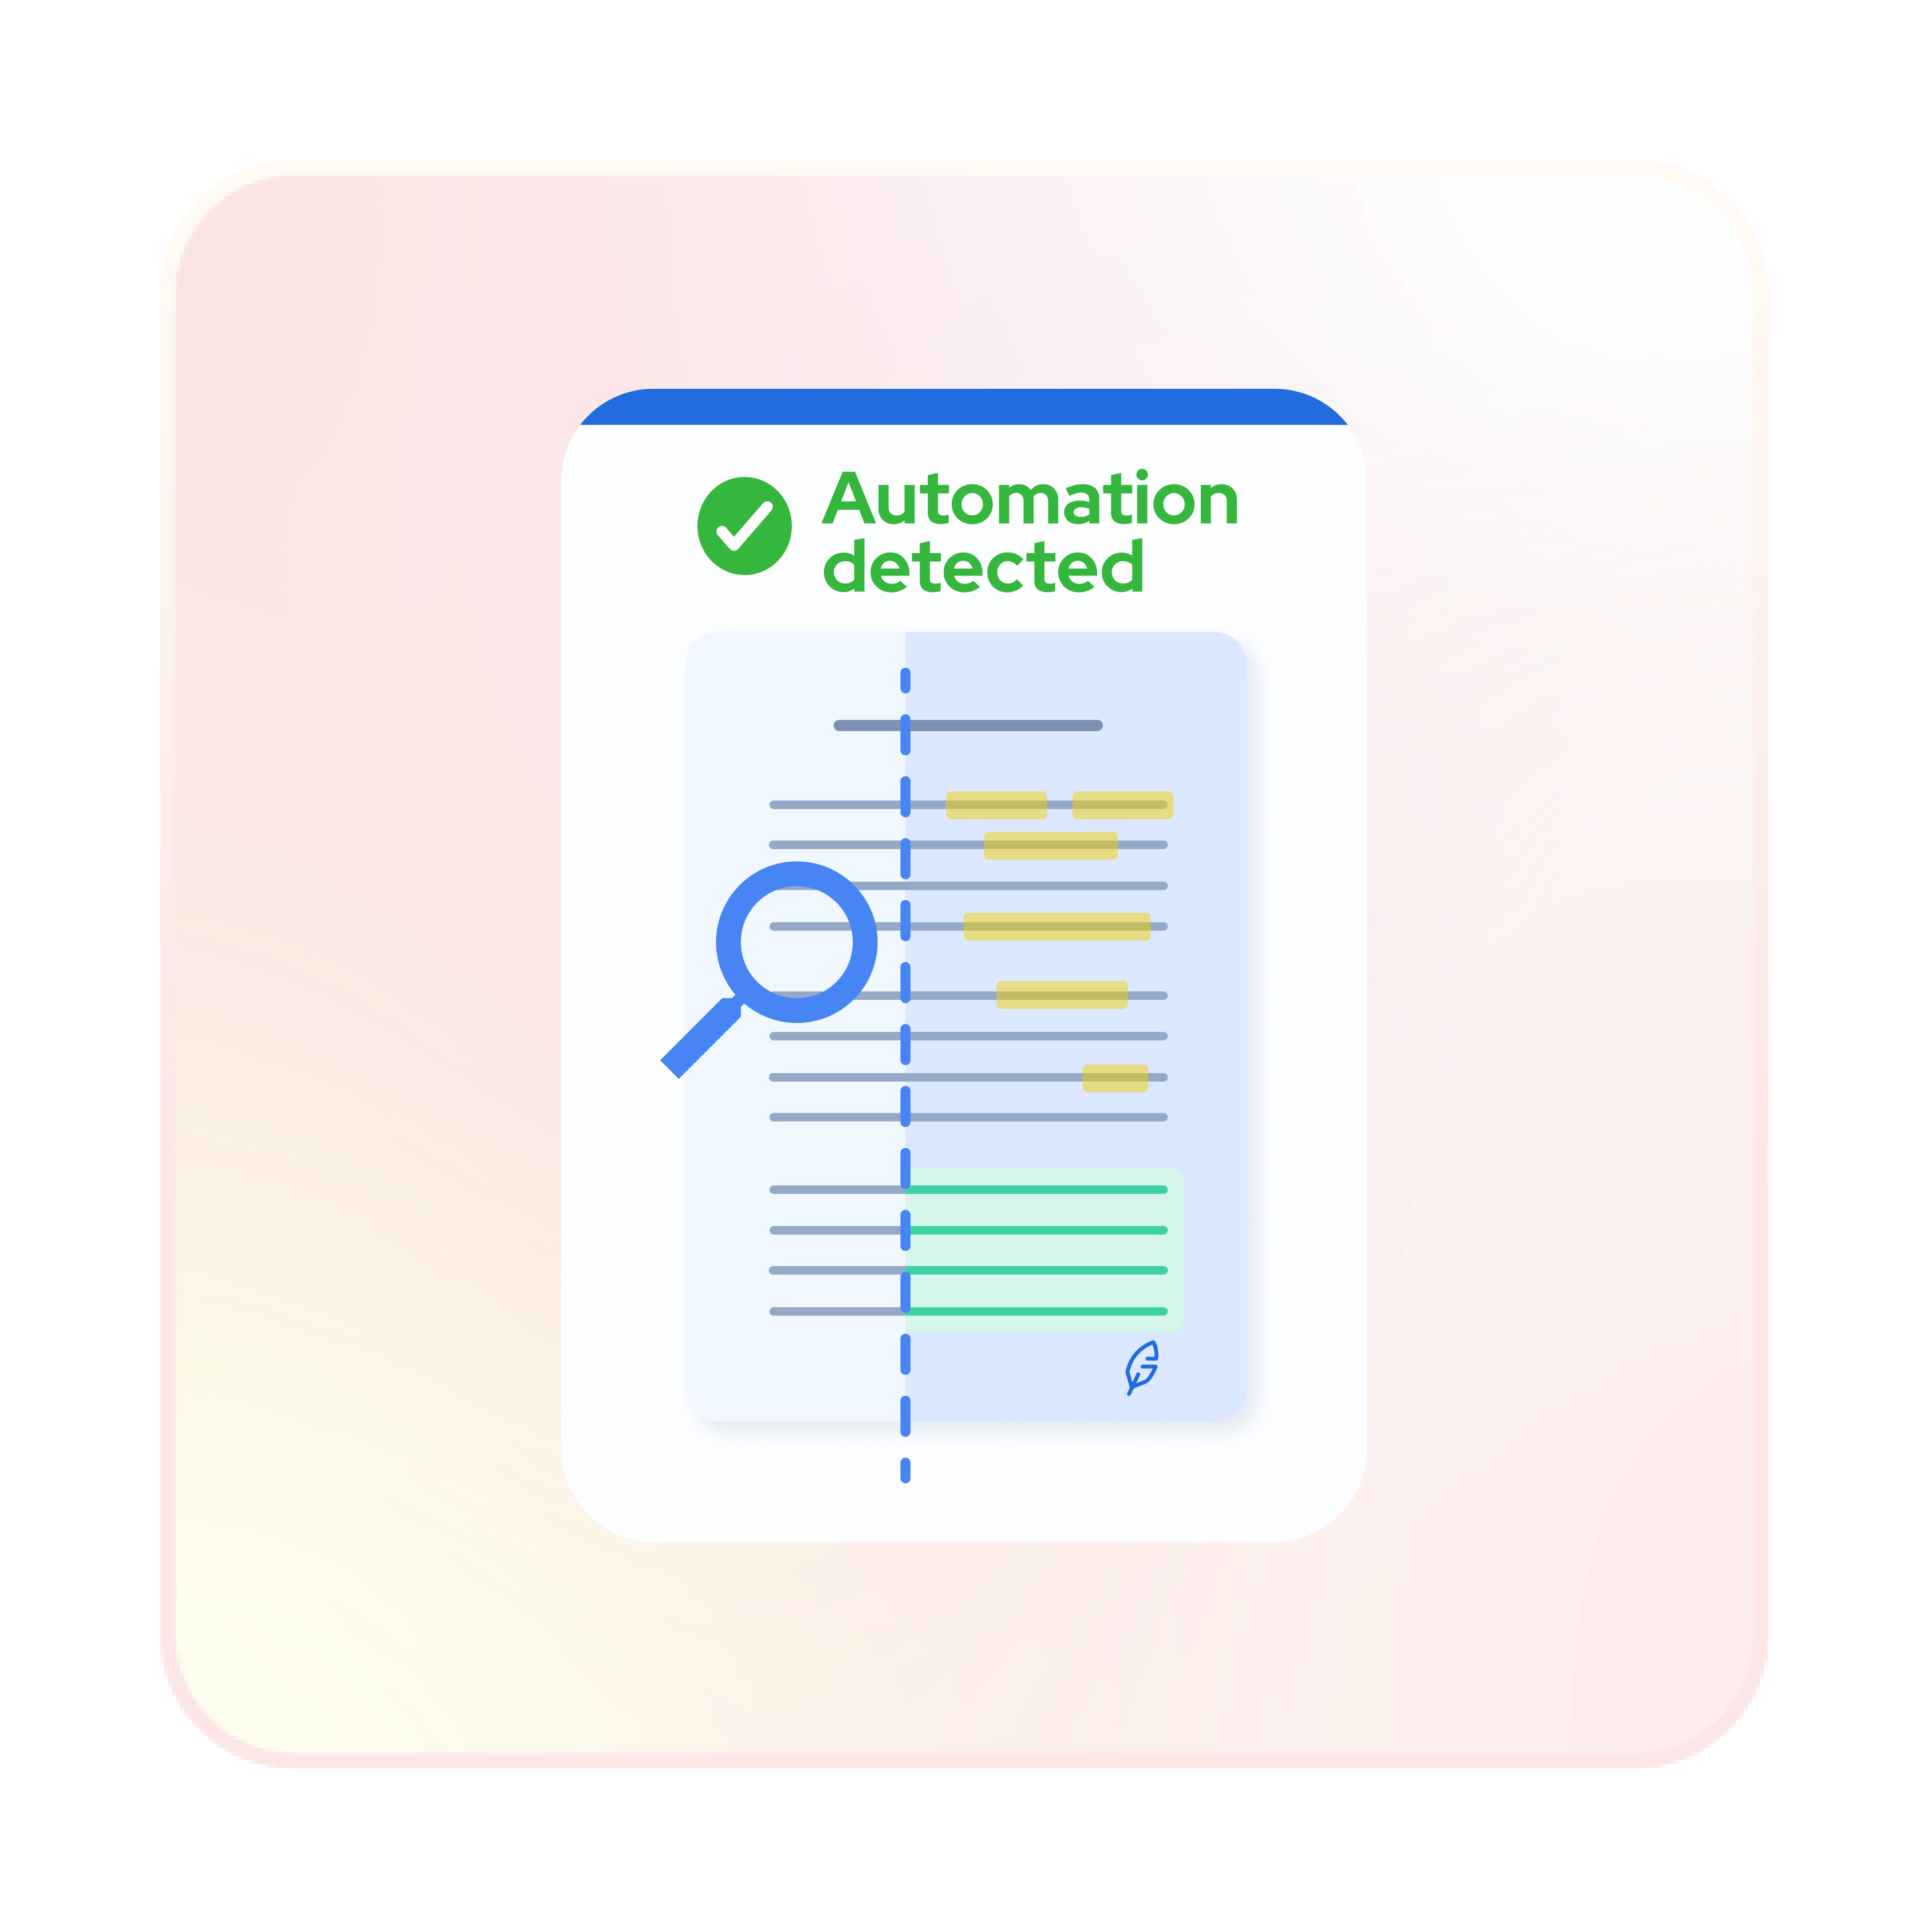 Automation detection